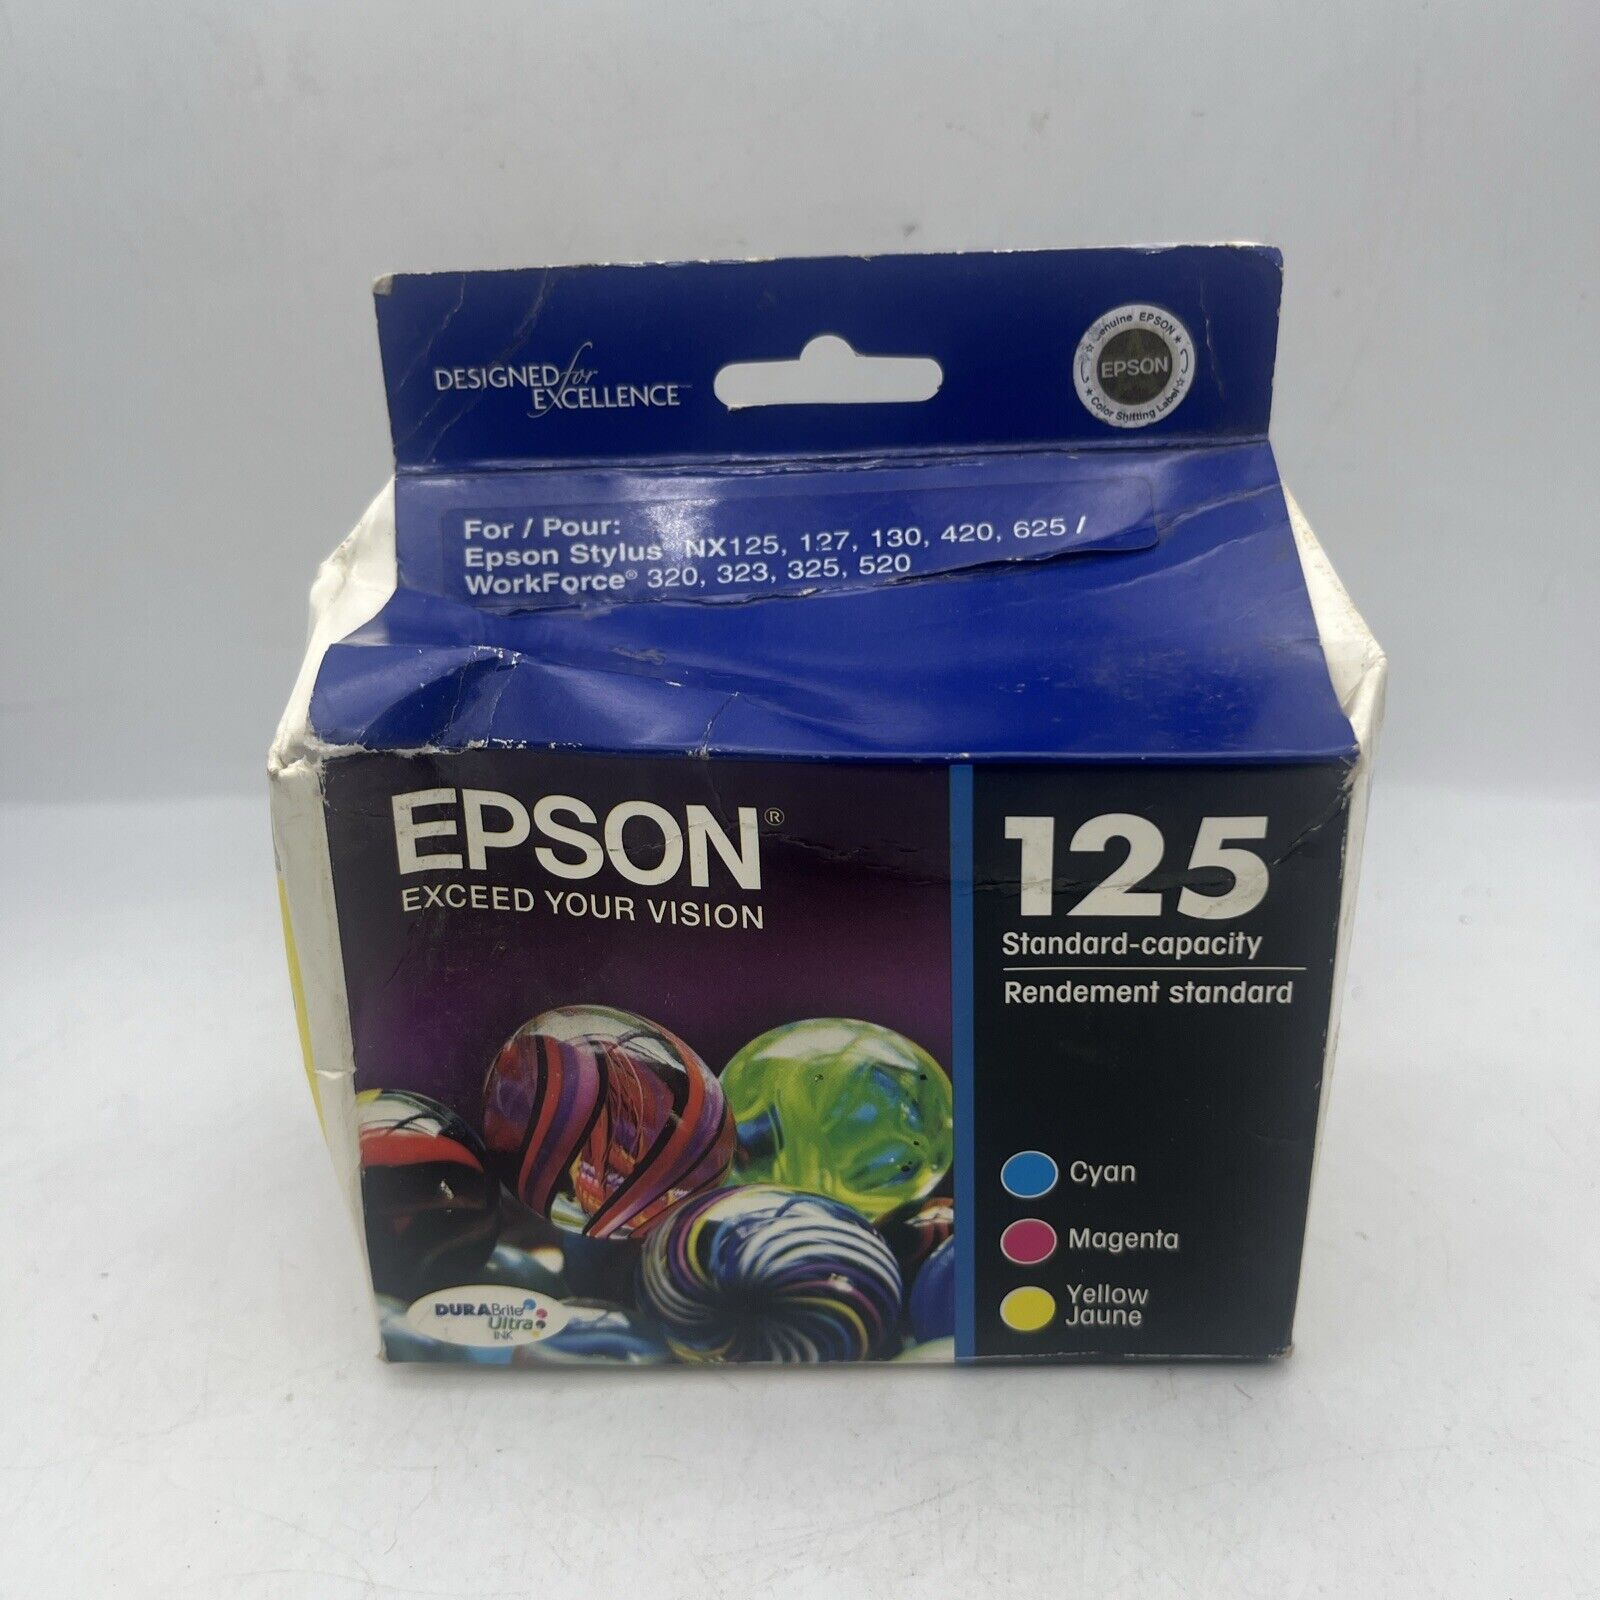 New Epson 125 DURABrite 4 Ink Cartridges - Cyan Magenta Yellow Black Exp. 01/13